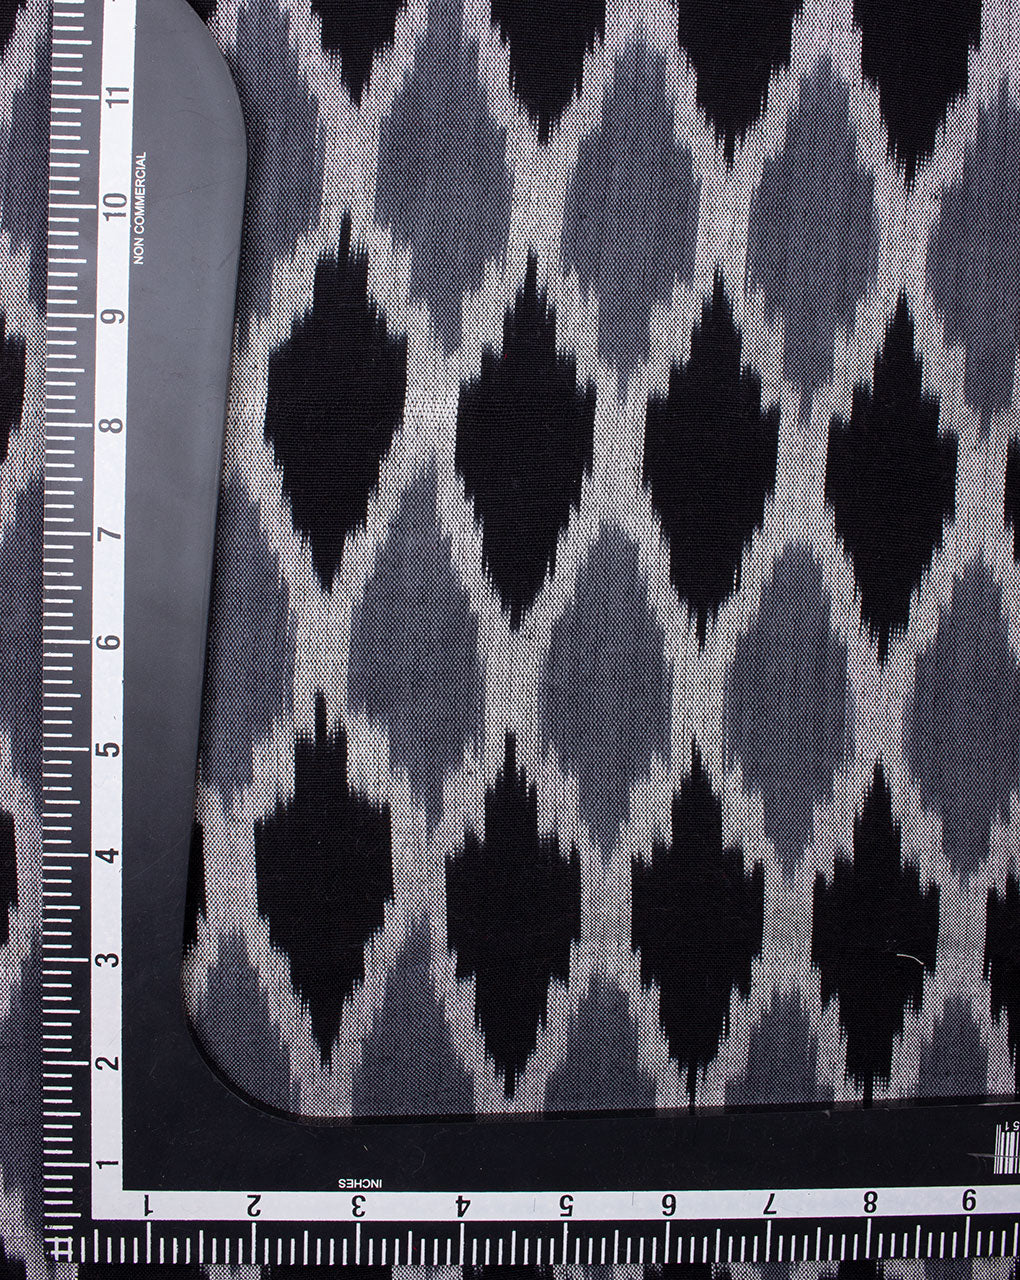 Grey & Black Trellis Pattern Woven Ikat Cotton Fabric - Fabriclore.com